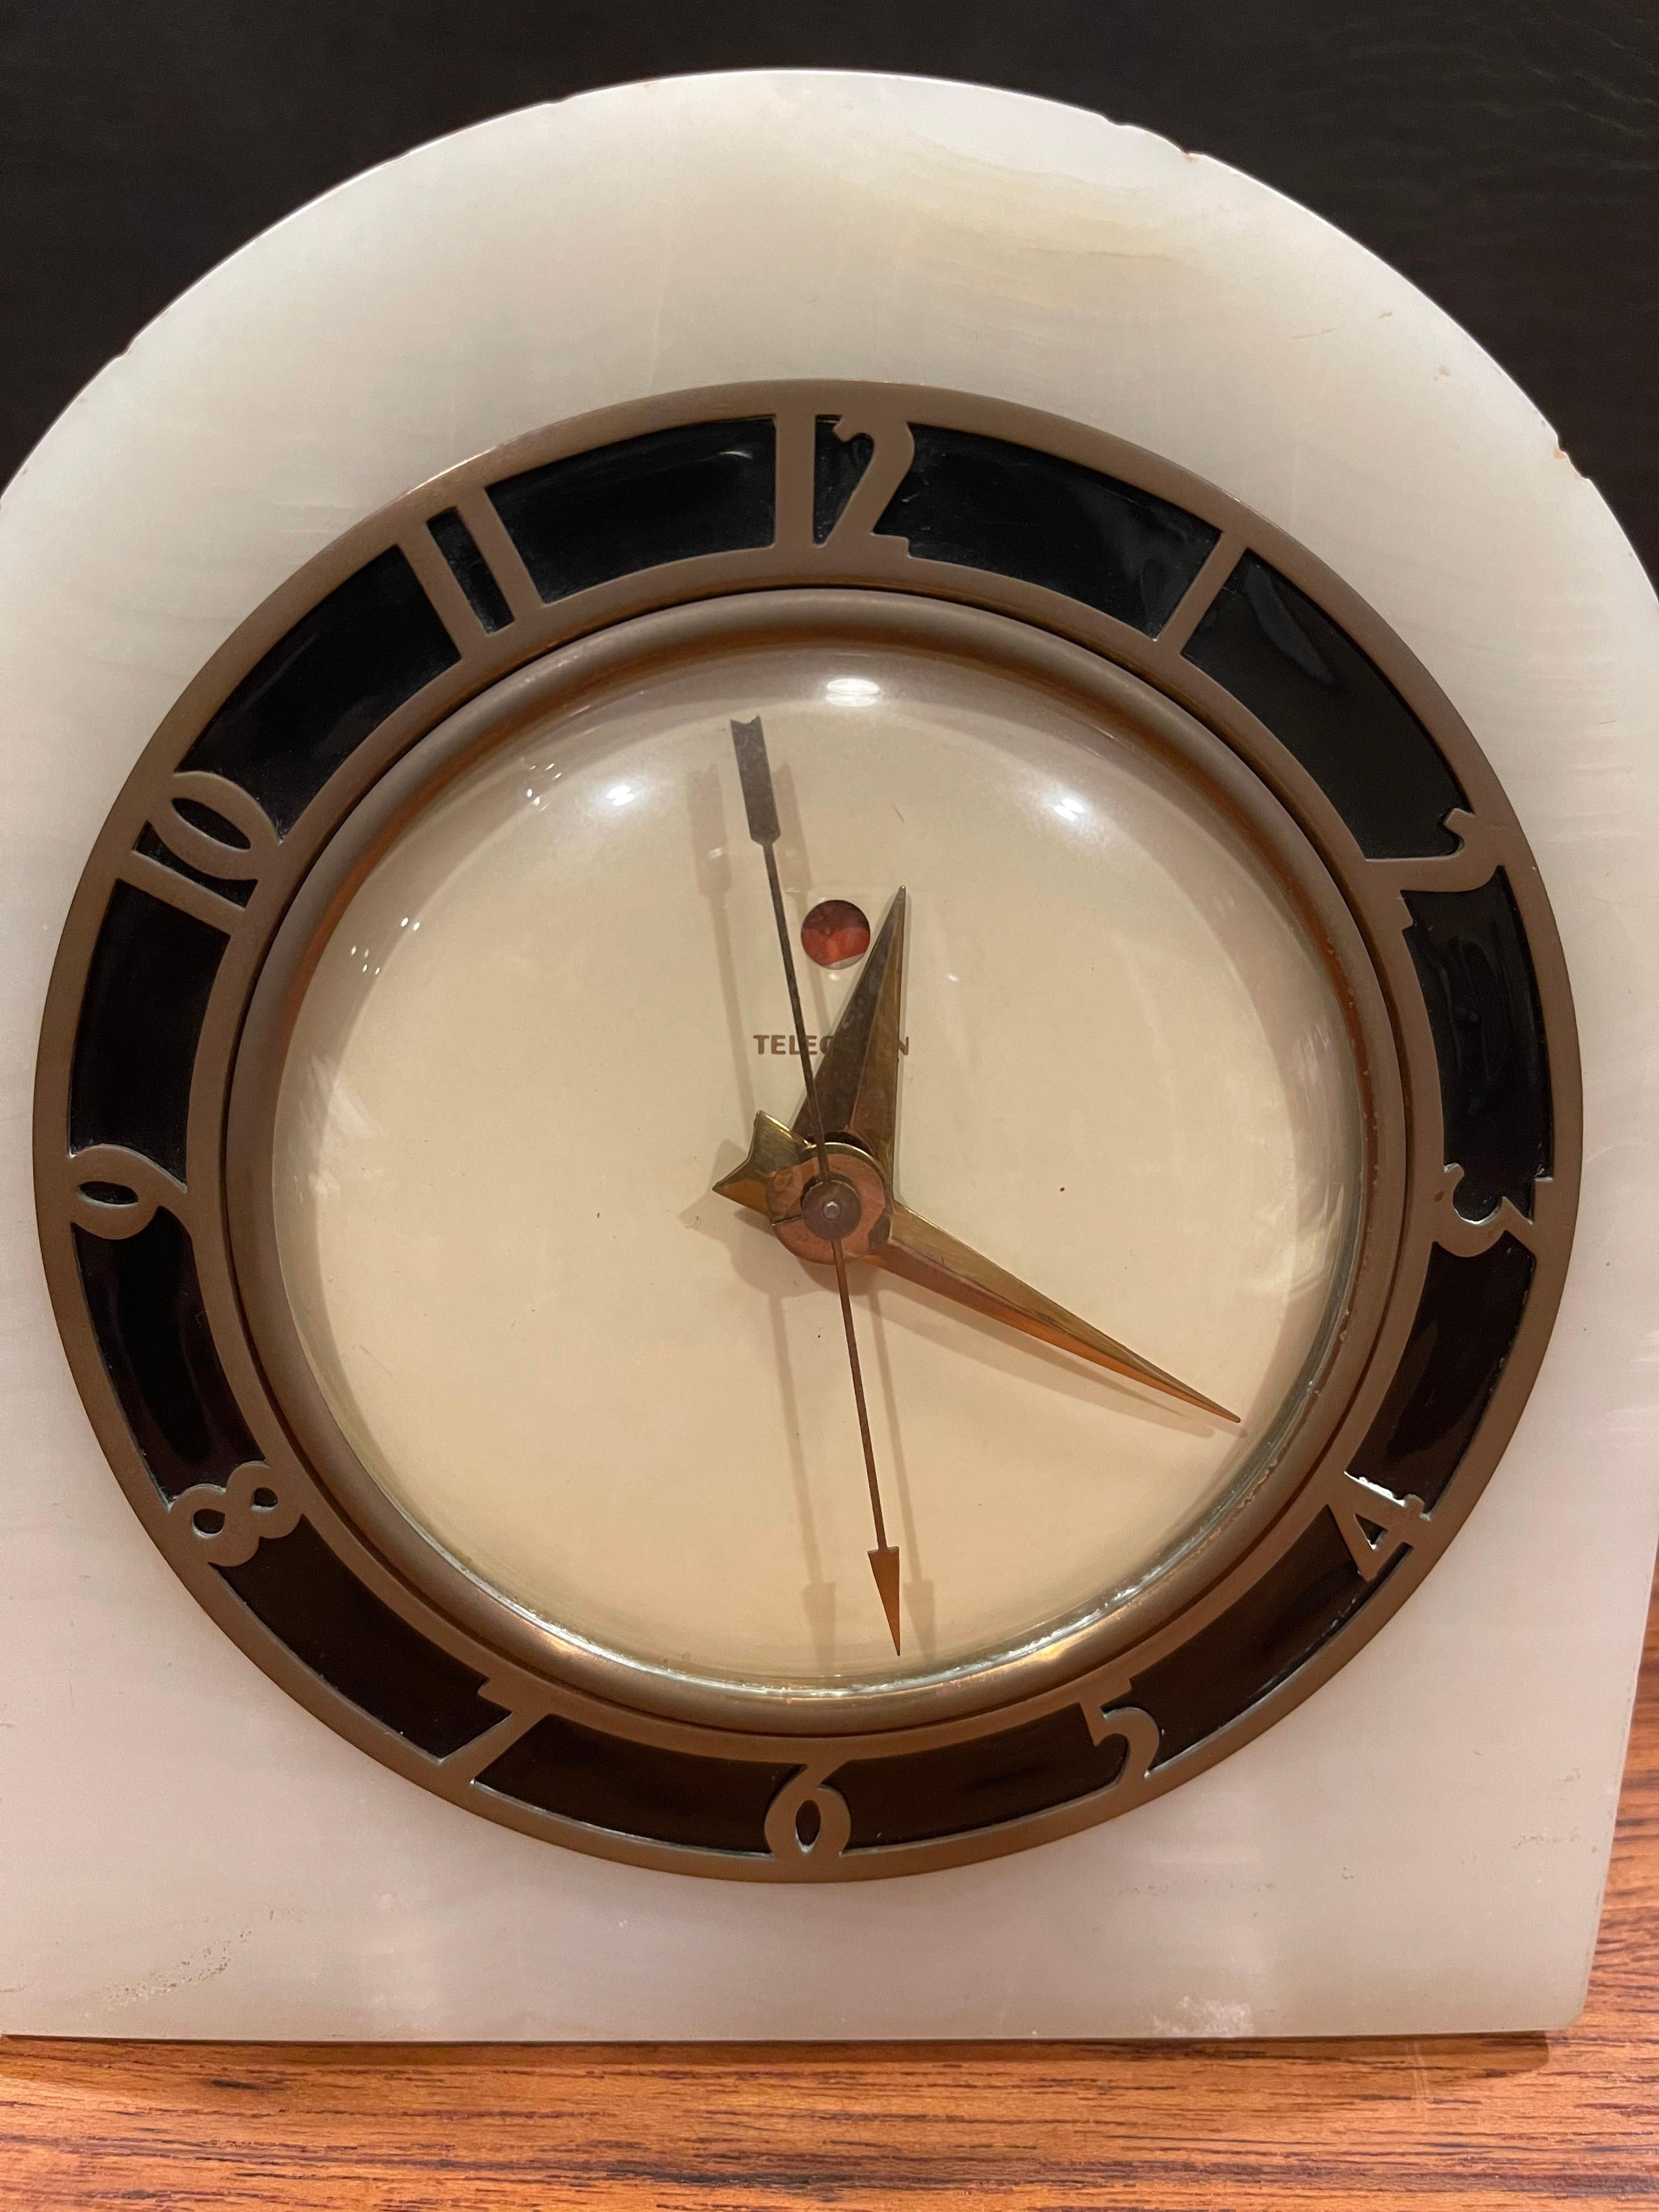 20th Century Electric Art Deco White Onyx Mantle Clock by Telechron